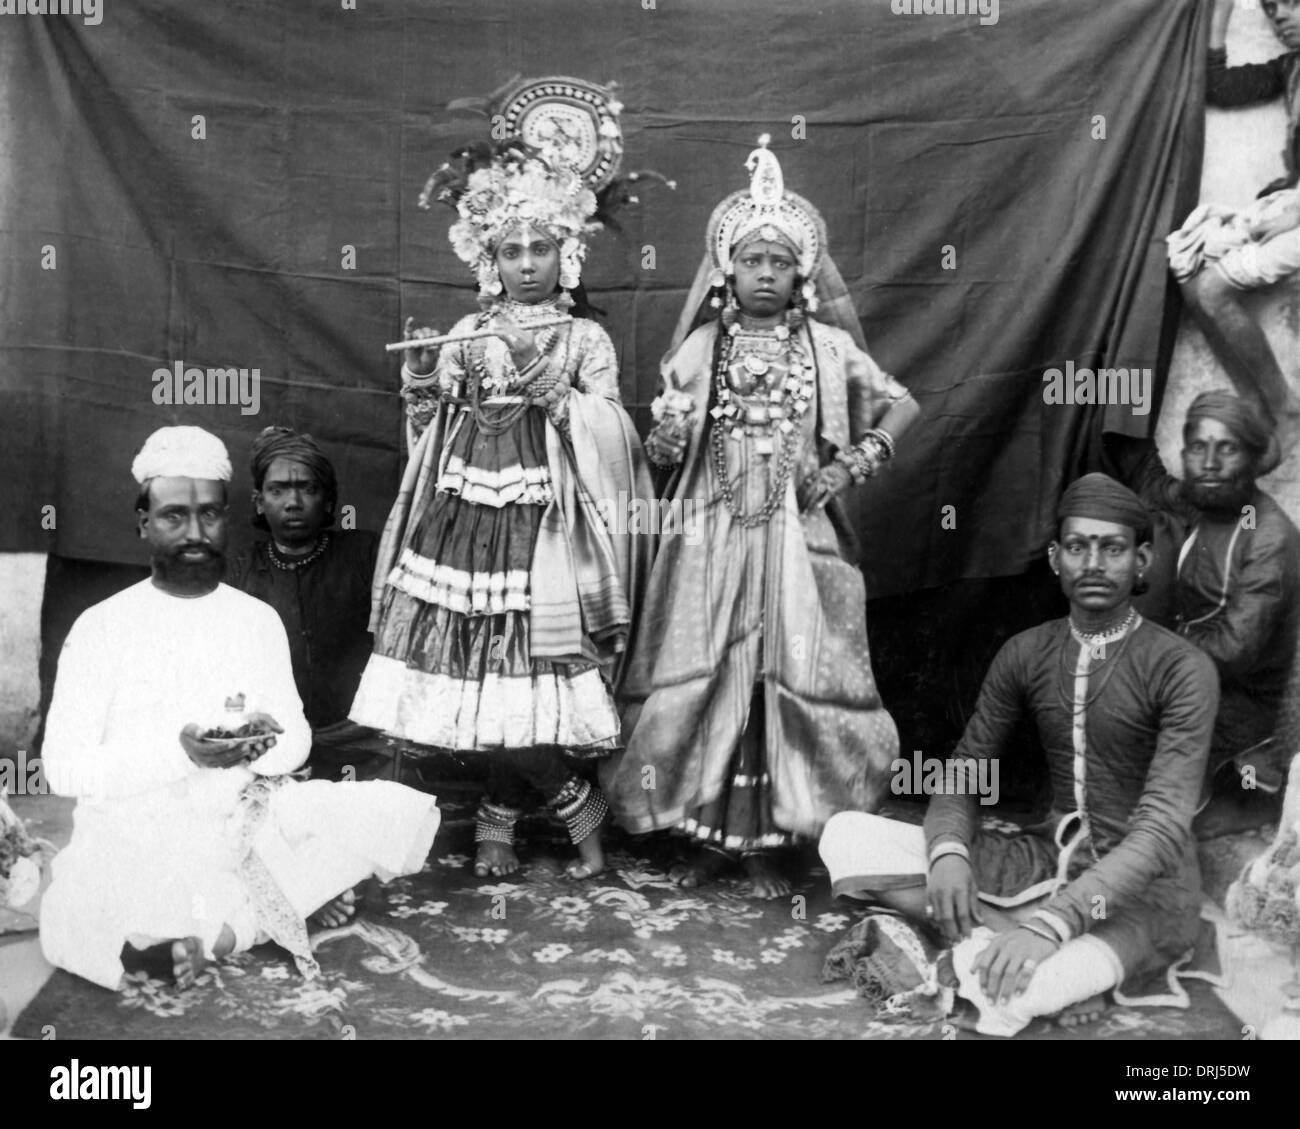 Child musicians in ornate costume, India Stock Photo